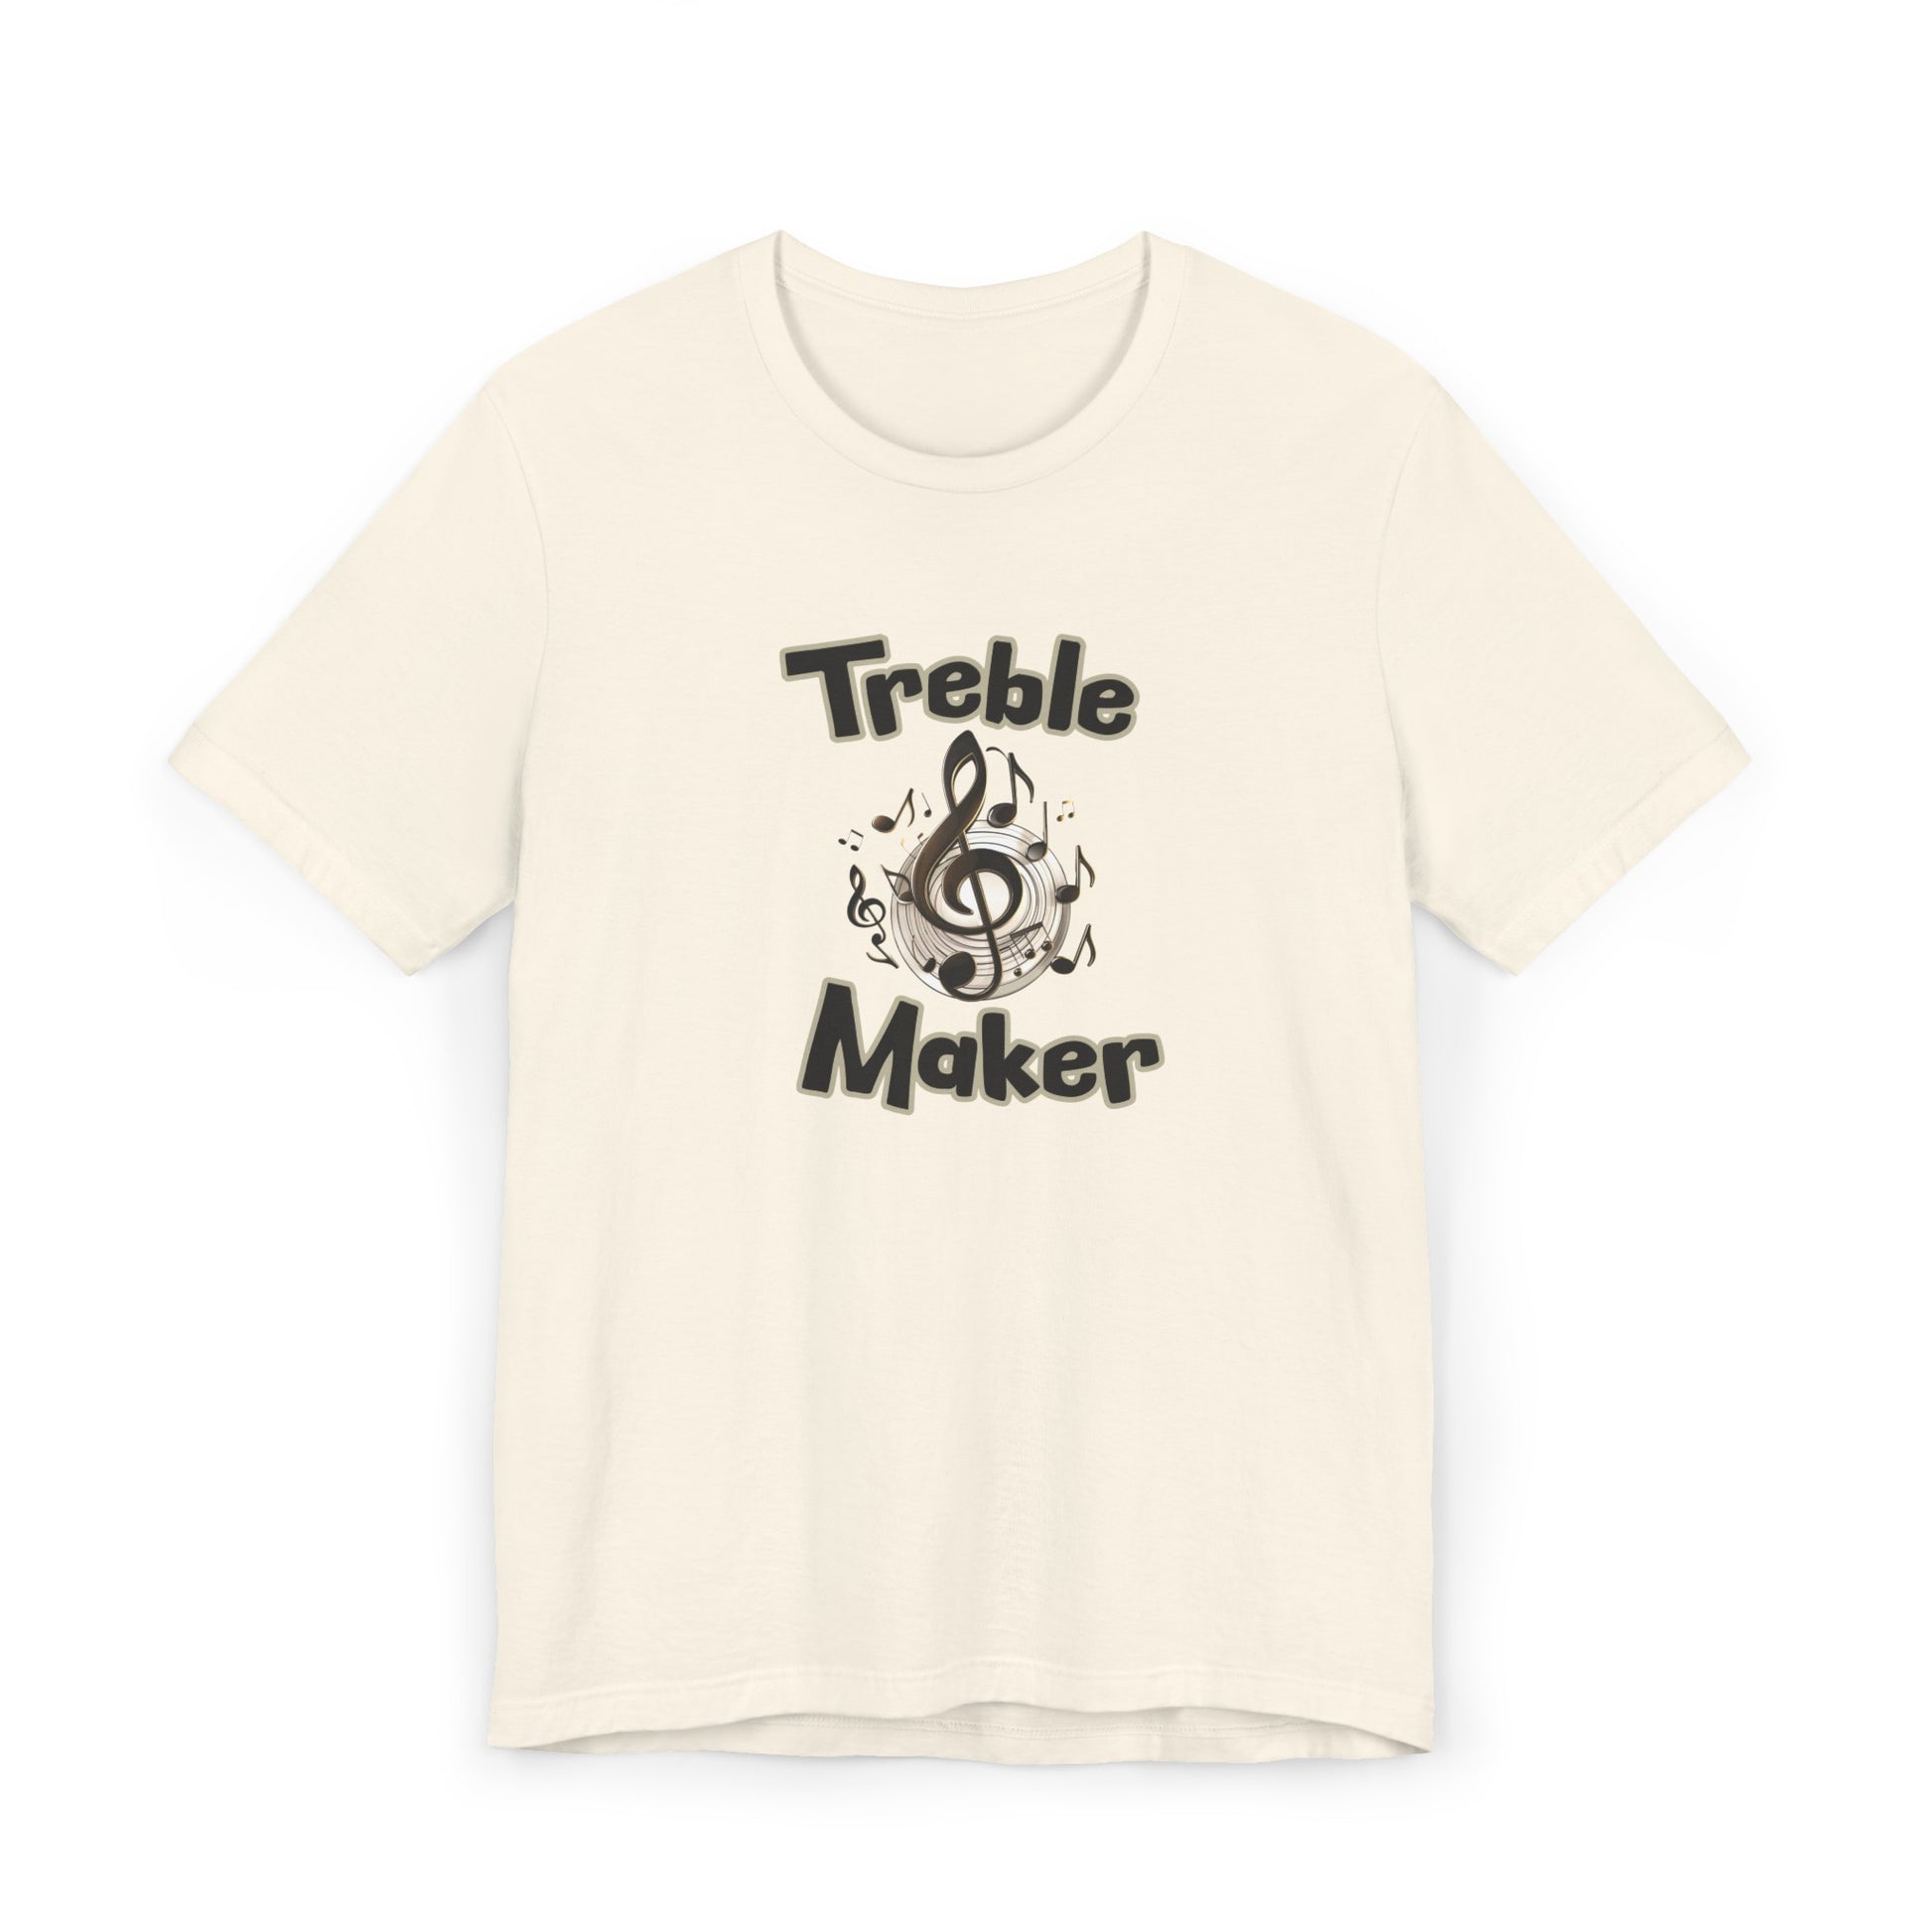 Treble Maker T-shirt in Natural color 